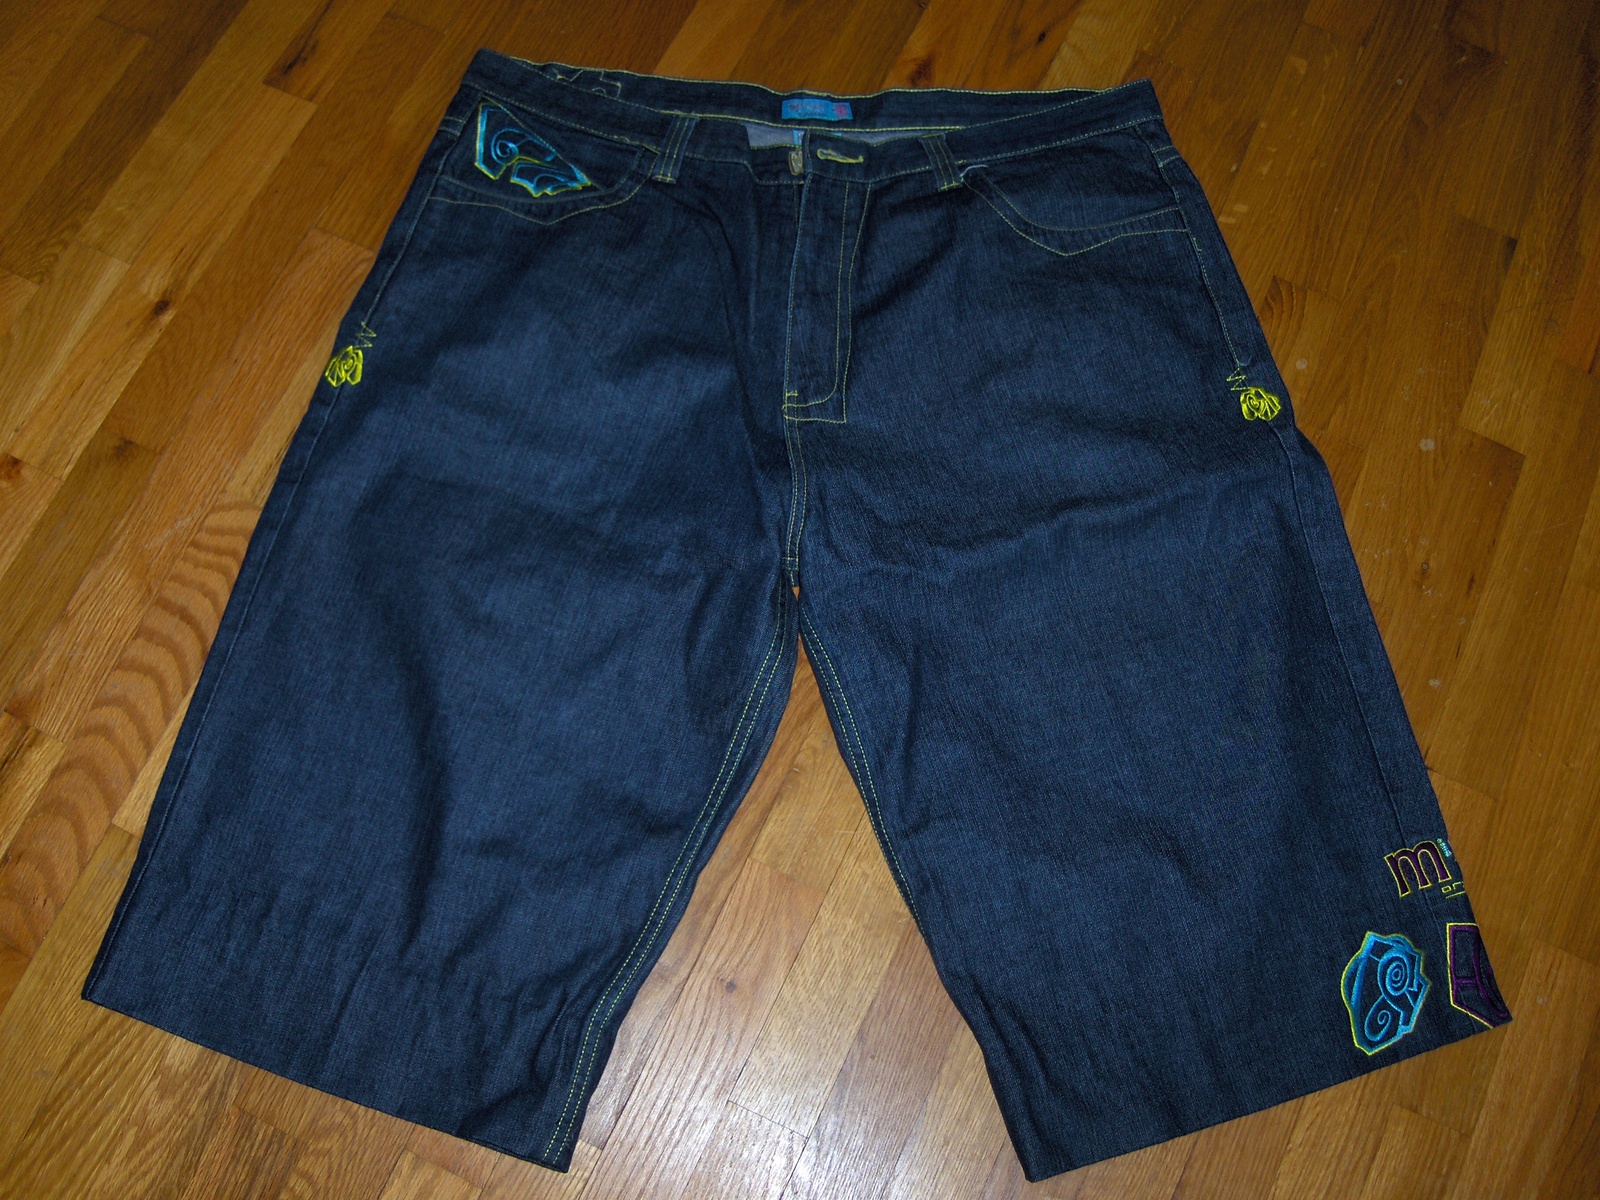 Miskeen Originals Jeans Shorts 44 Hip Hop Embroidered Europe Boarder ...